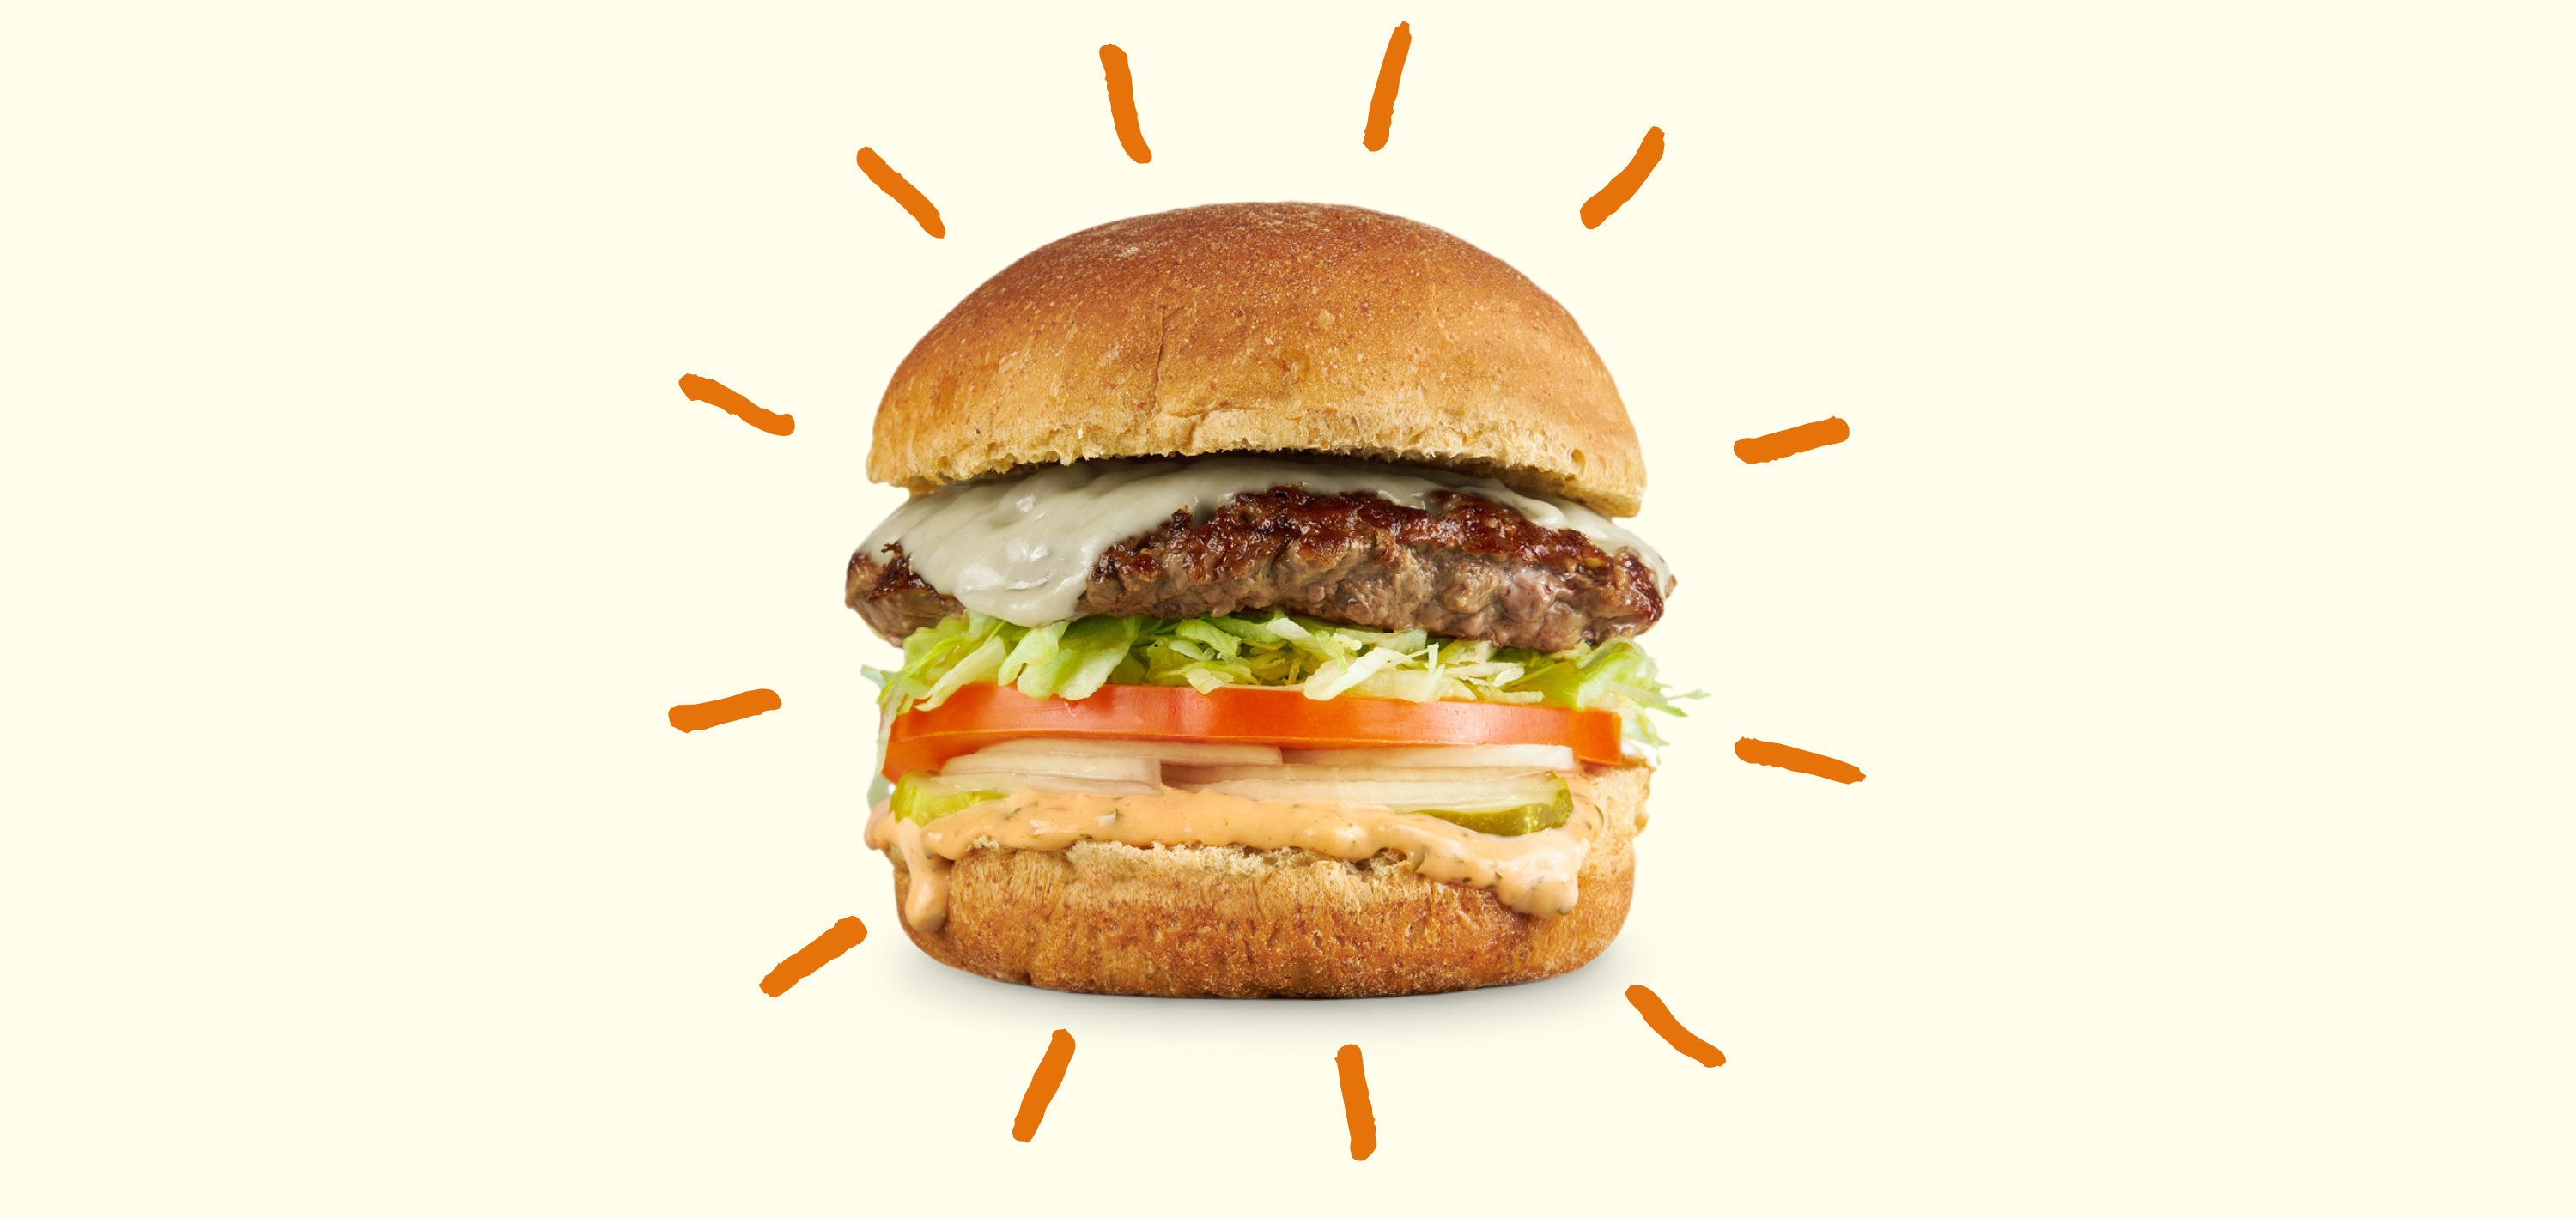 Ethos Burger Image - Desktop Version